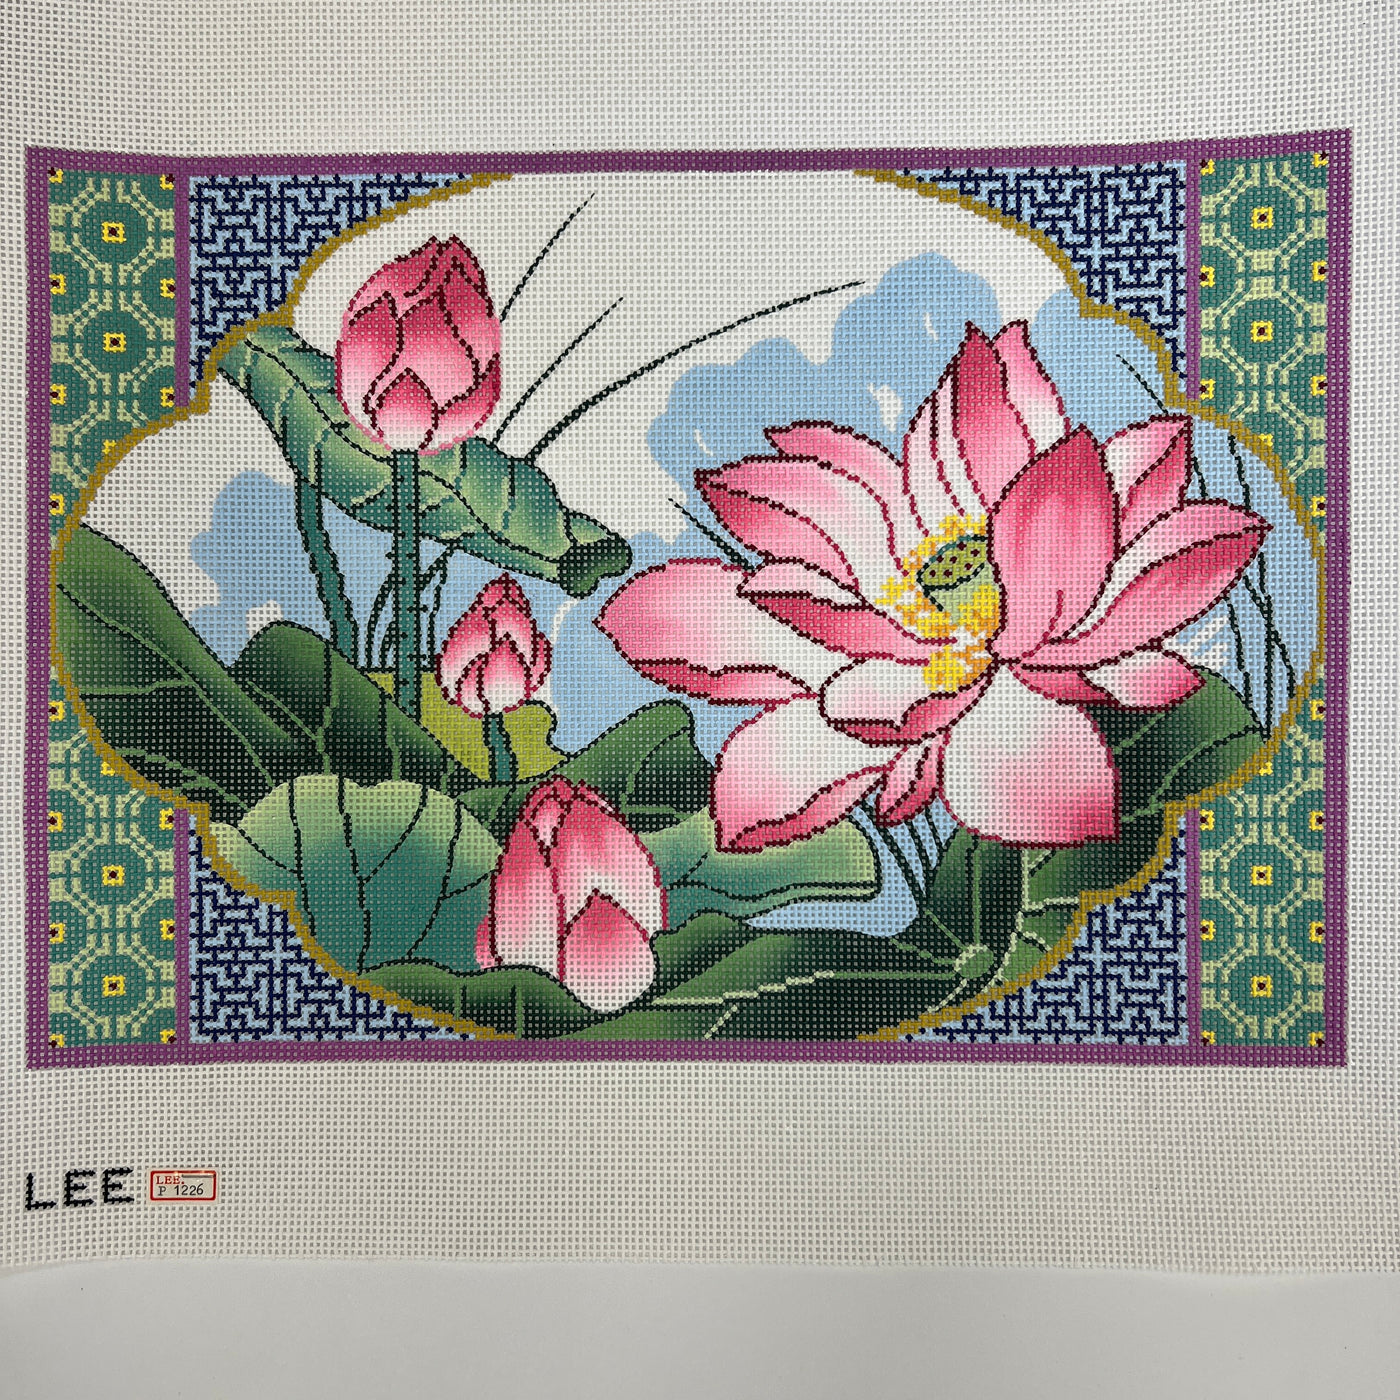 Framed Lotus Needlepoint Canvas